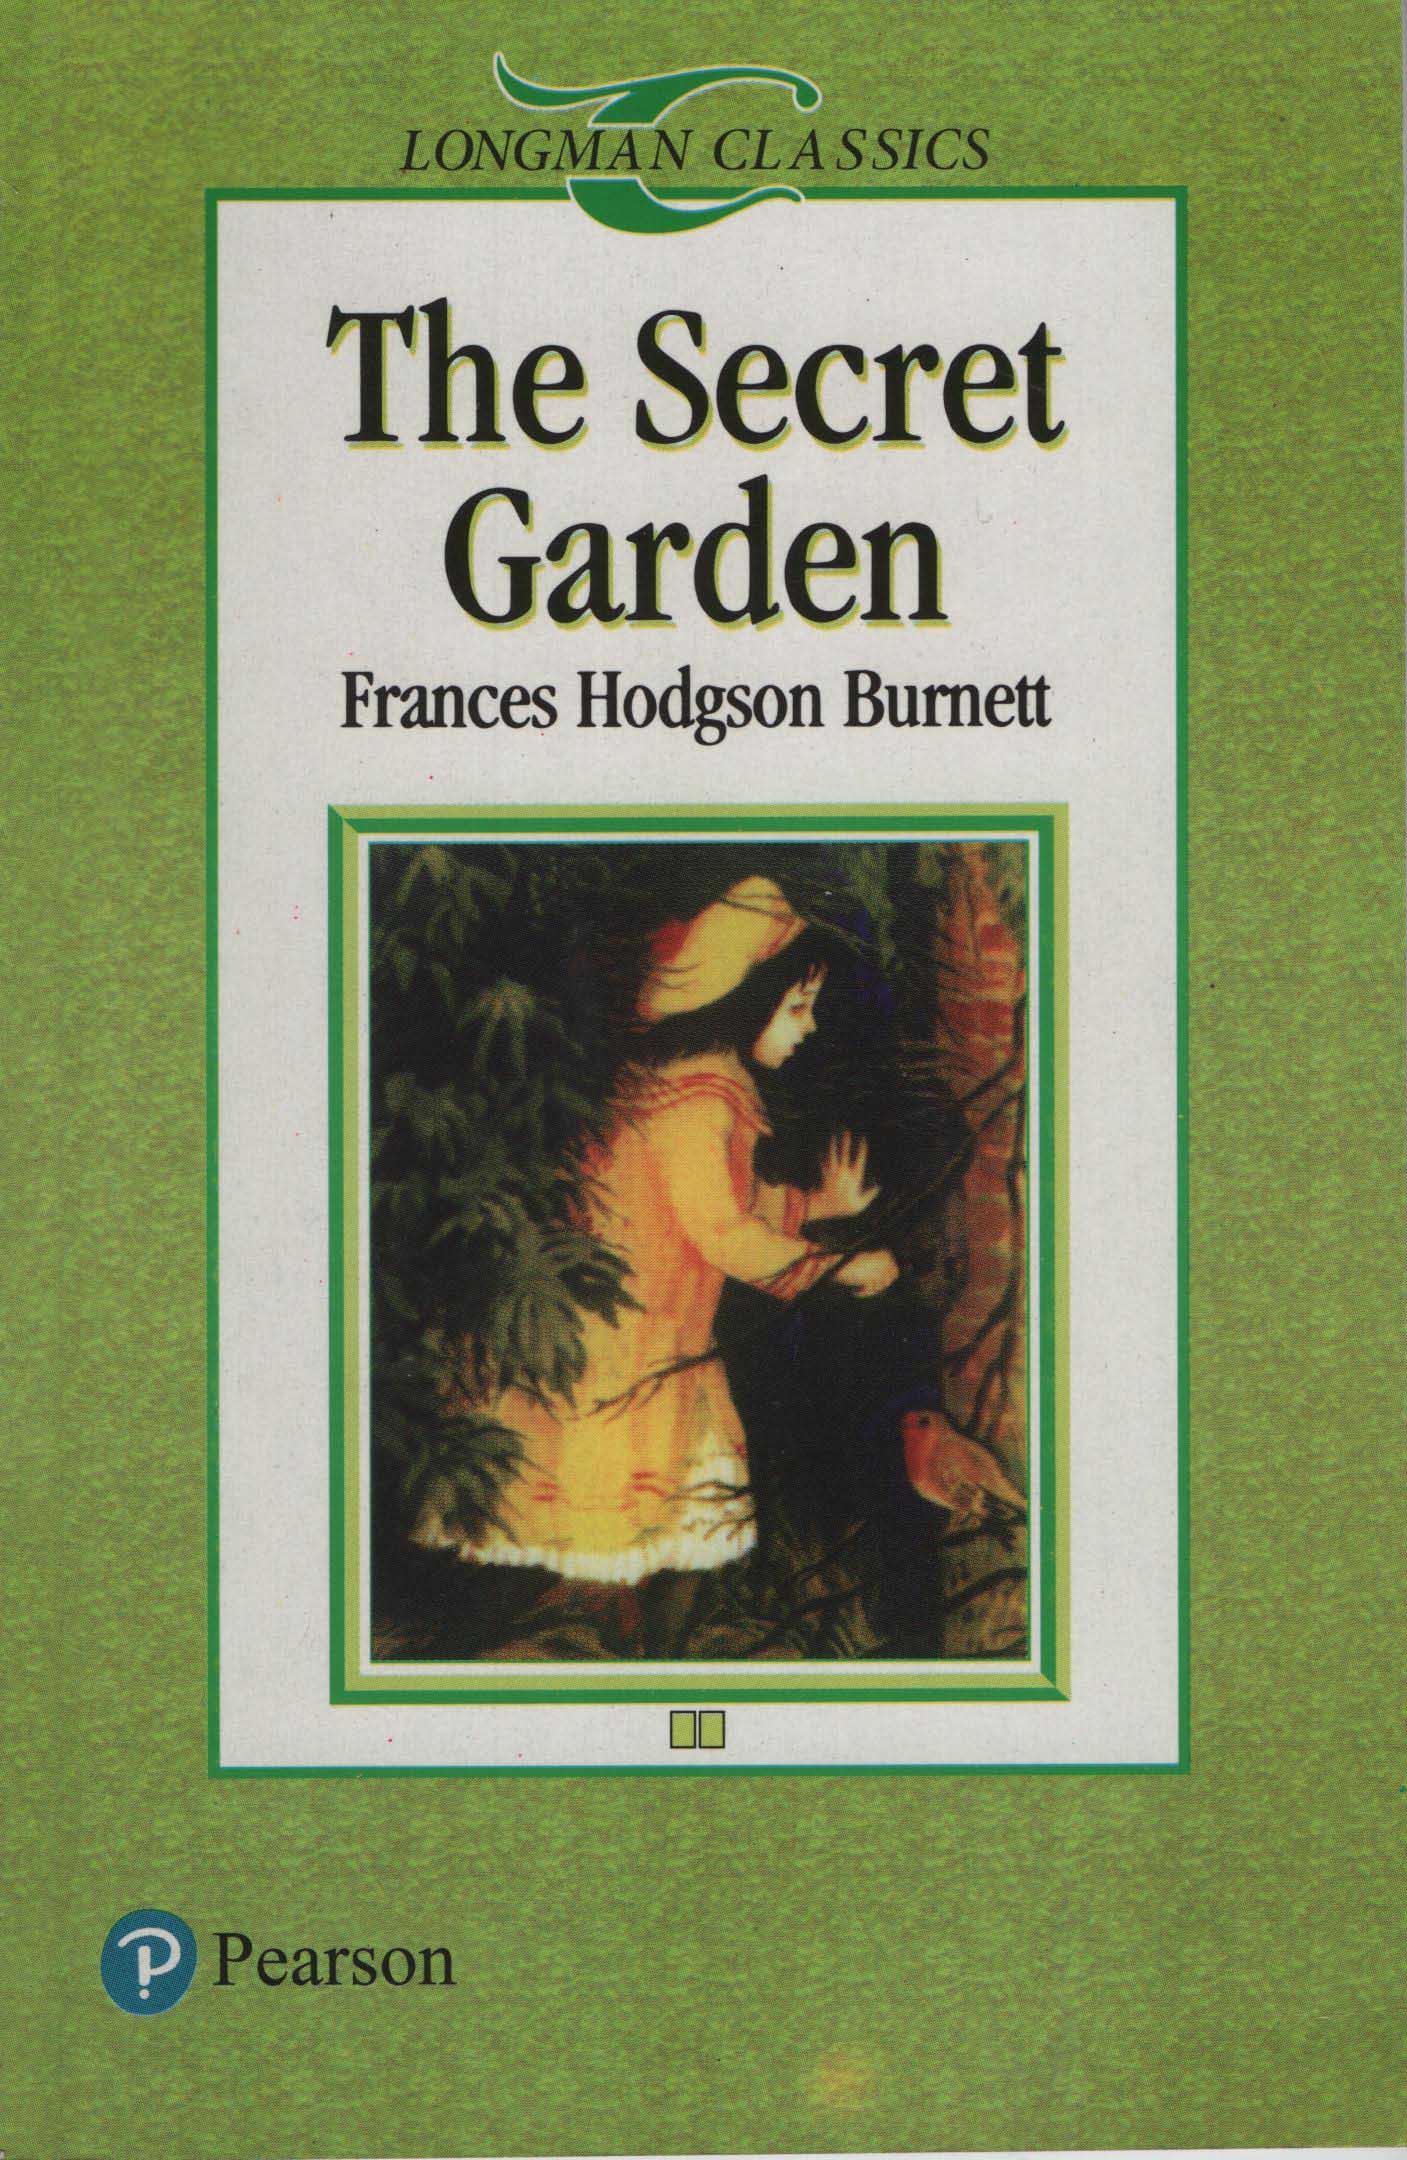 The Secret Garden (Longman Classics)